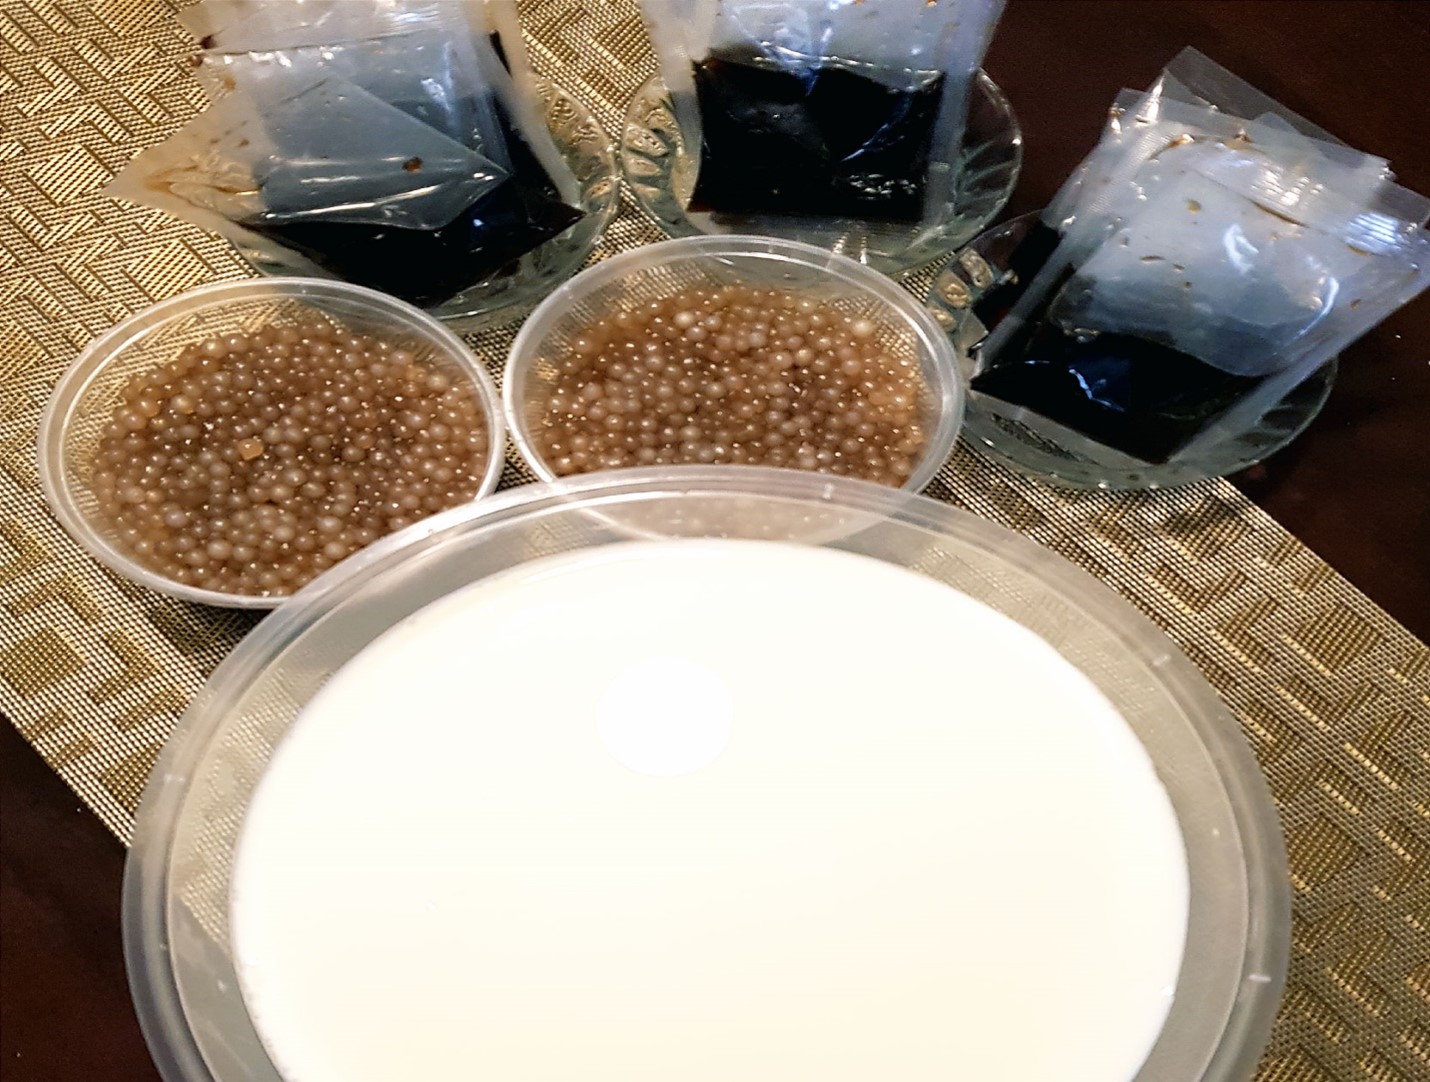 Food experts turn okara wastes into flour, DOST-NCR provides funds under CRADLE R&D program image